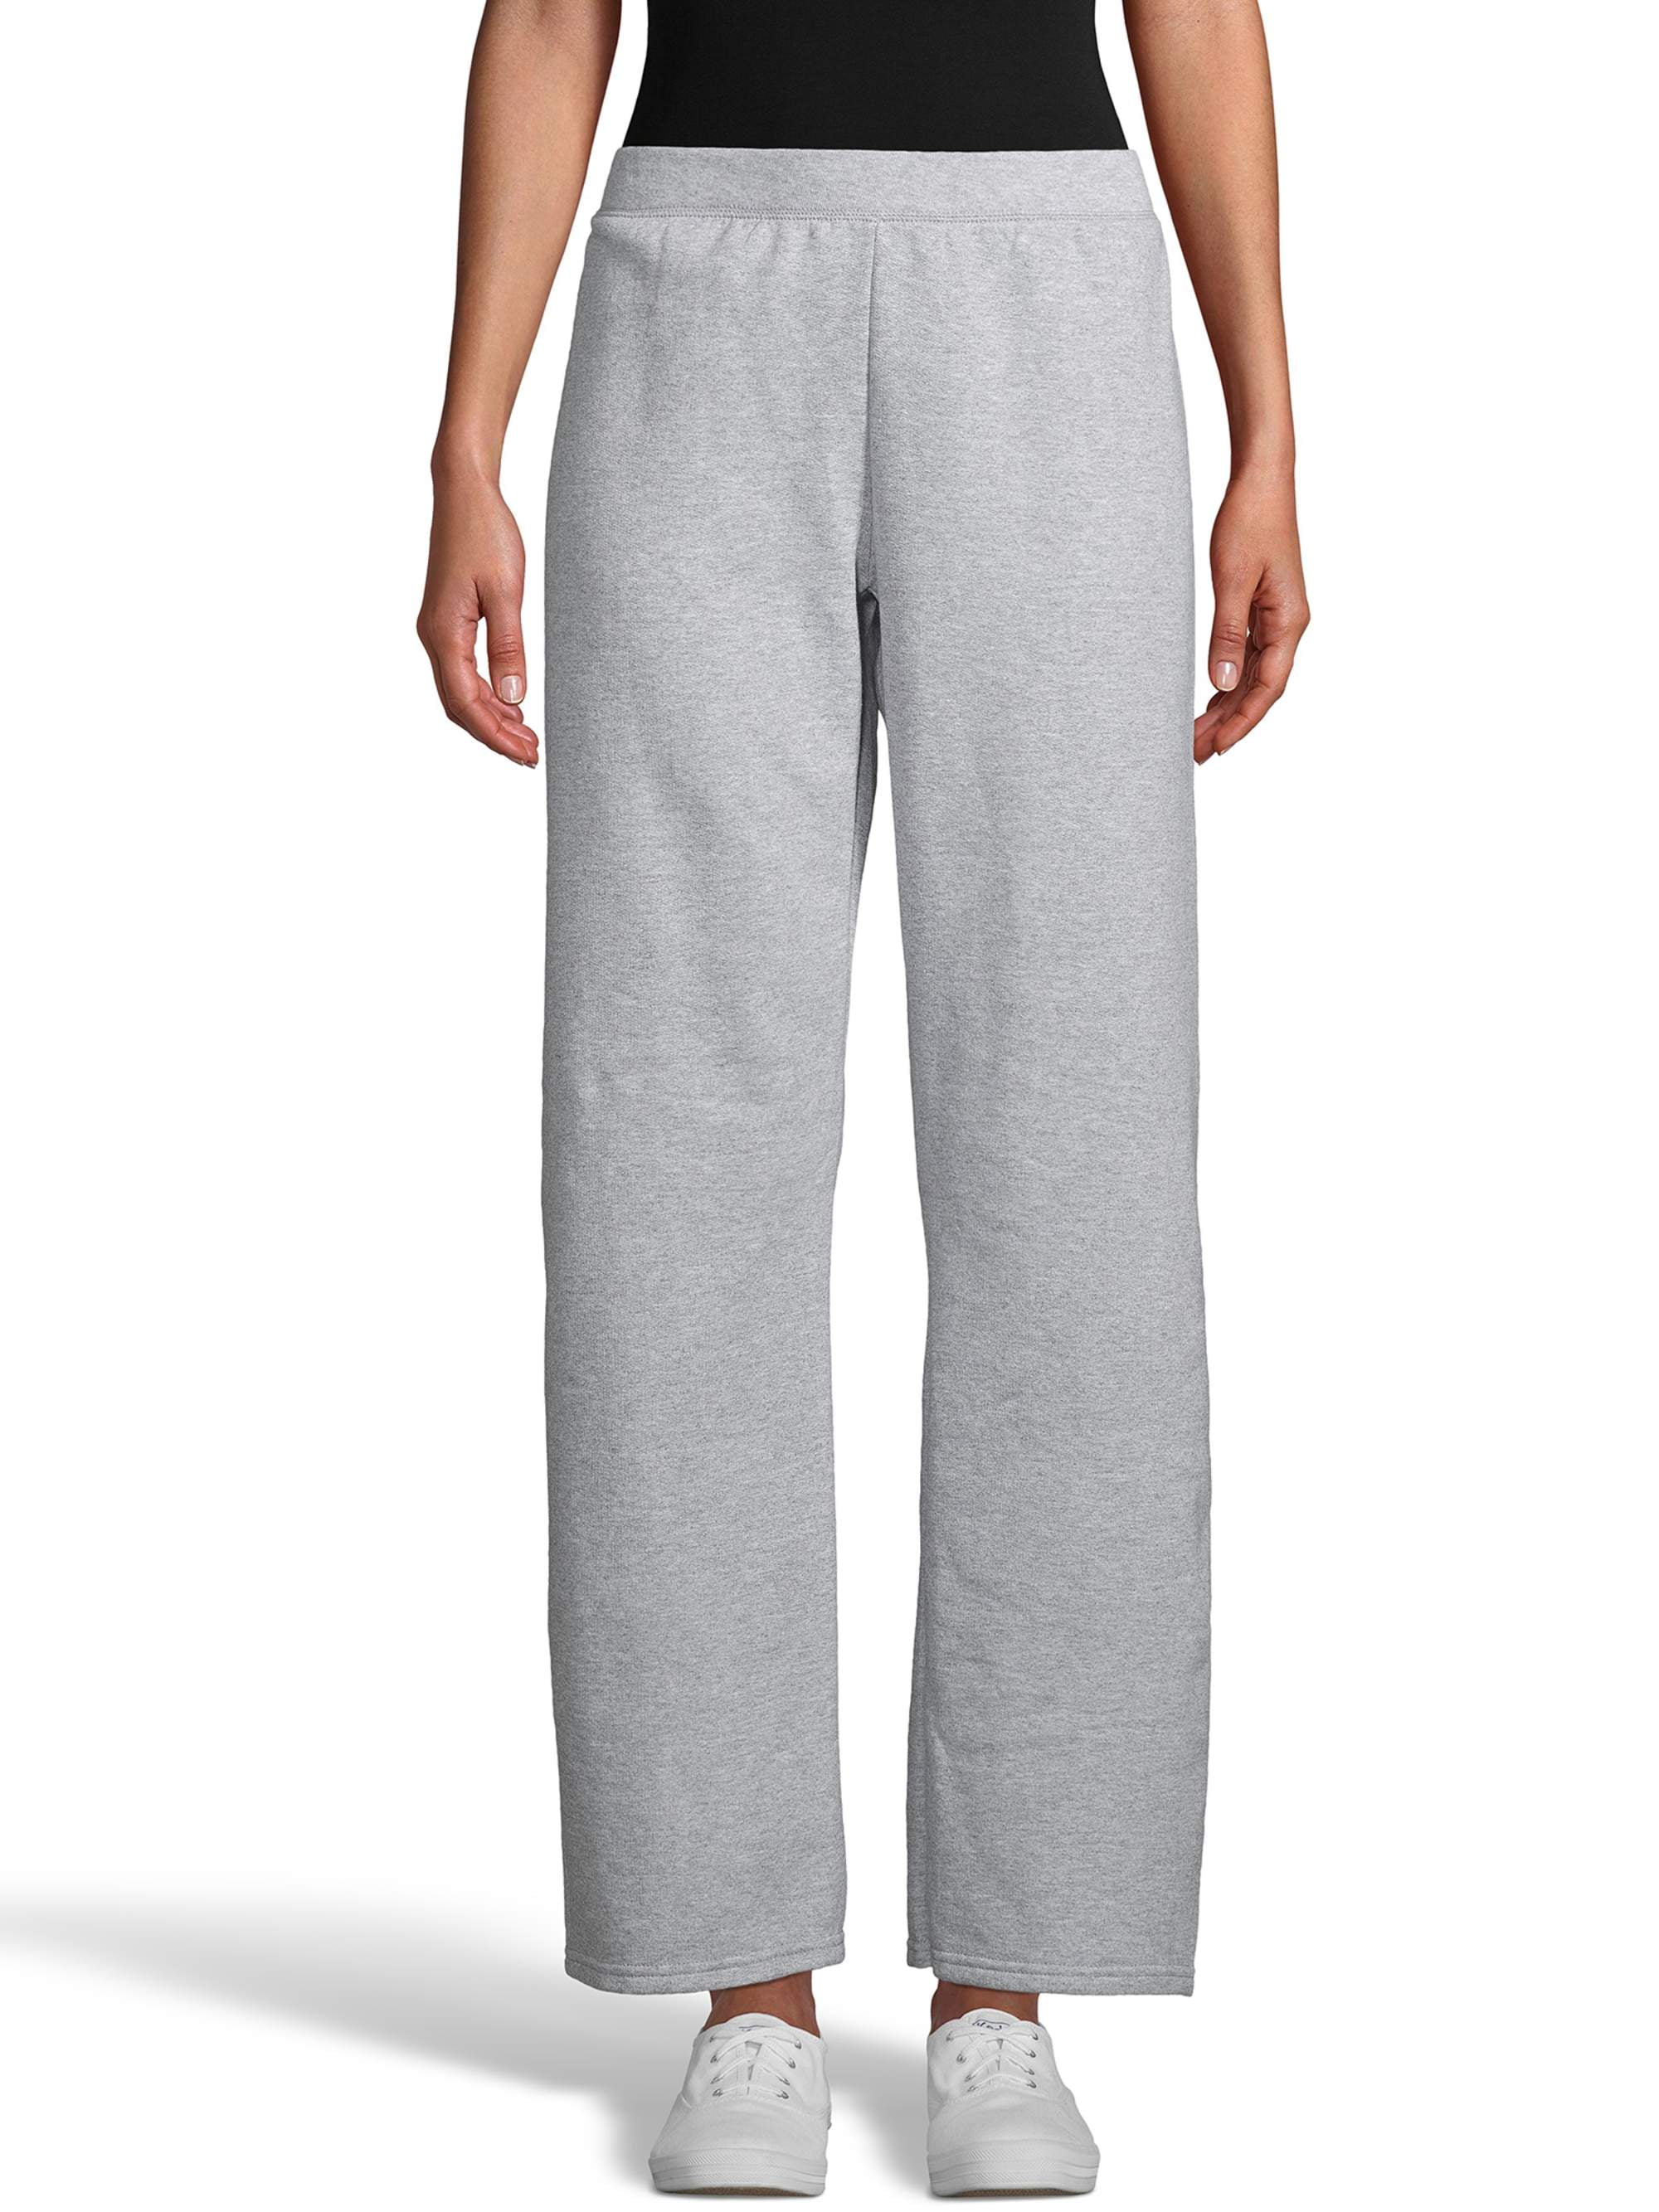 Hanes ComfortSoft EcoSmart Women's Open Bottom Fleece Sweatpants, Sizes S- XXL and Petite 